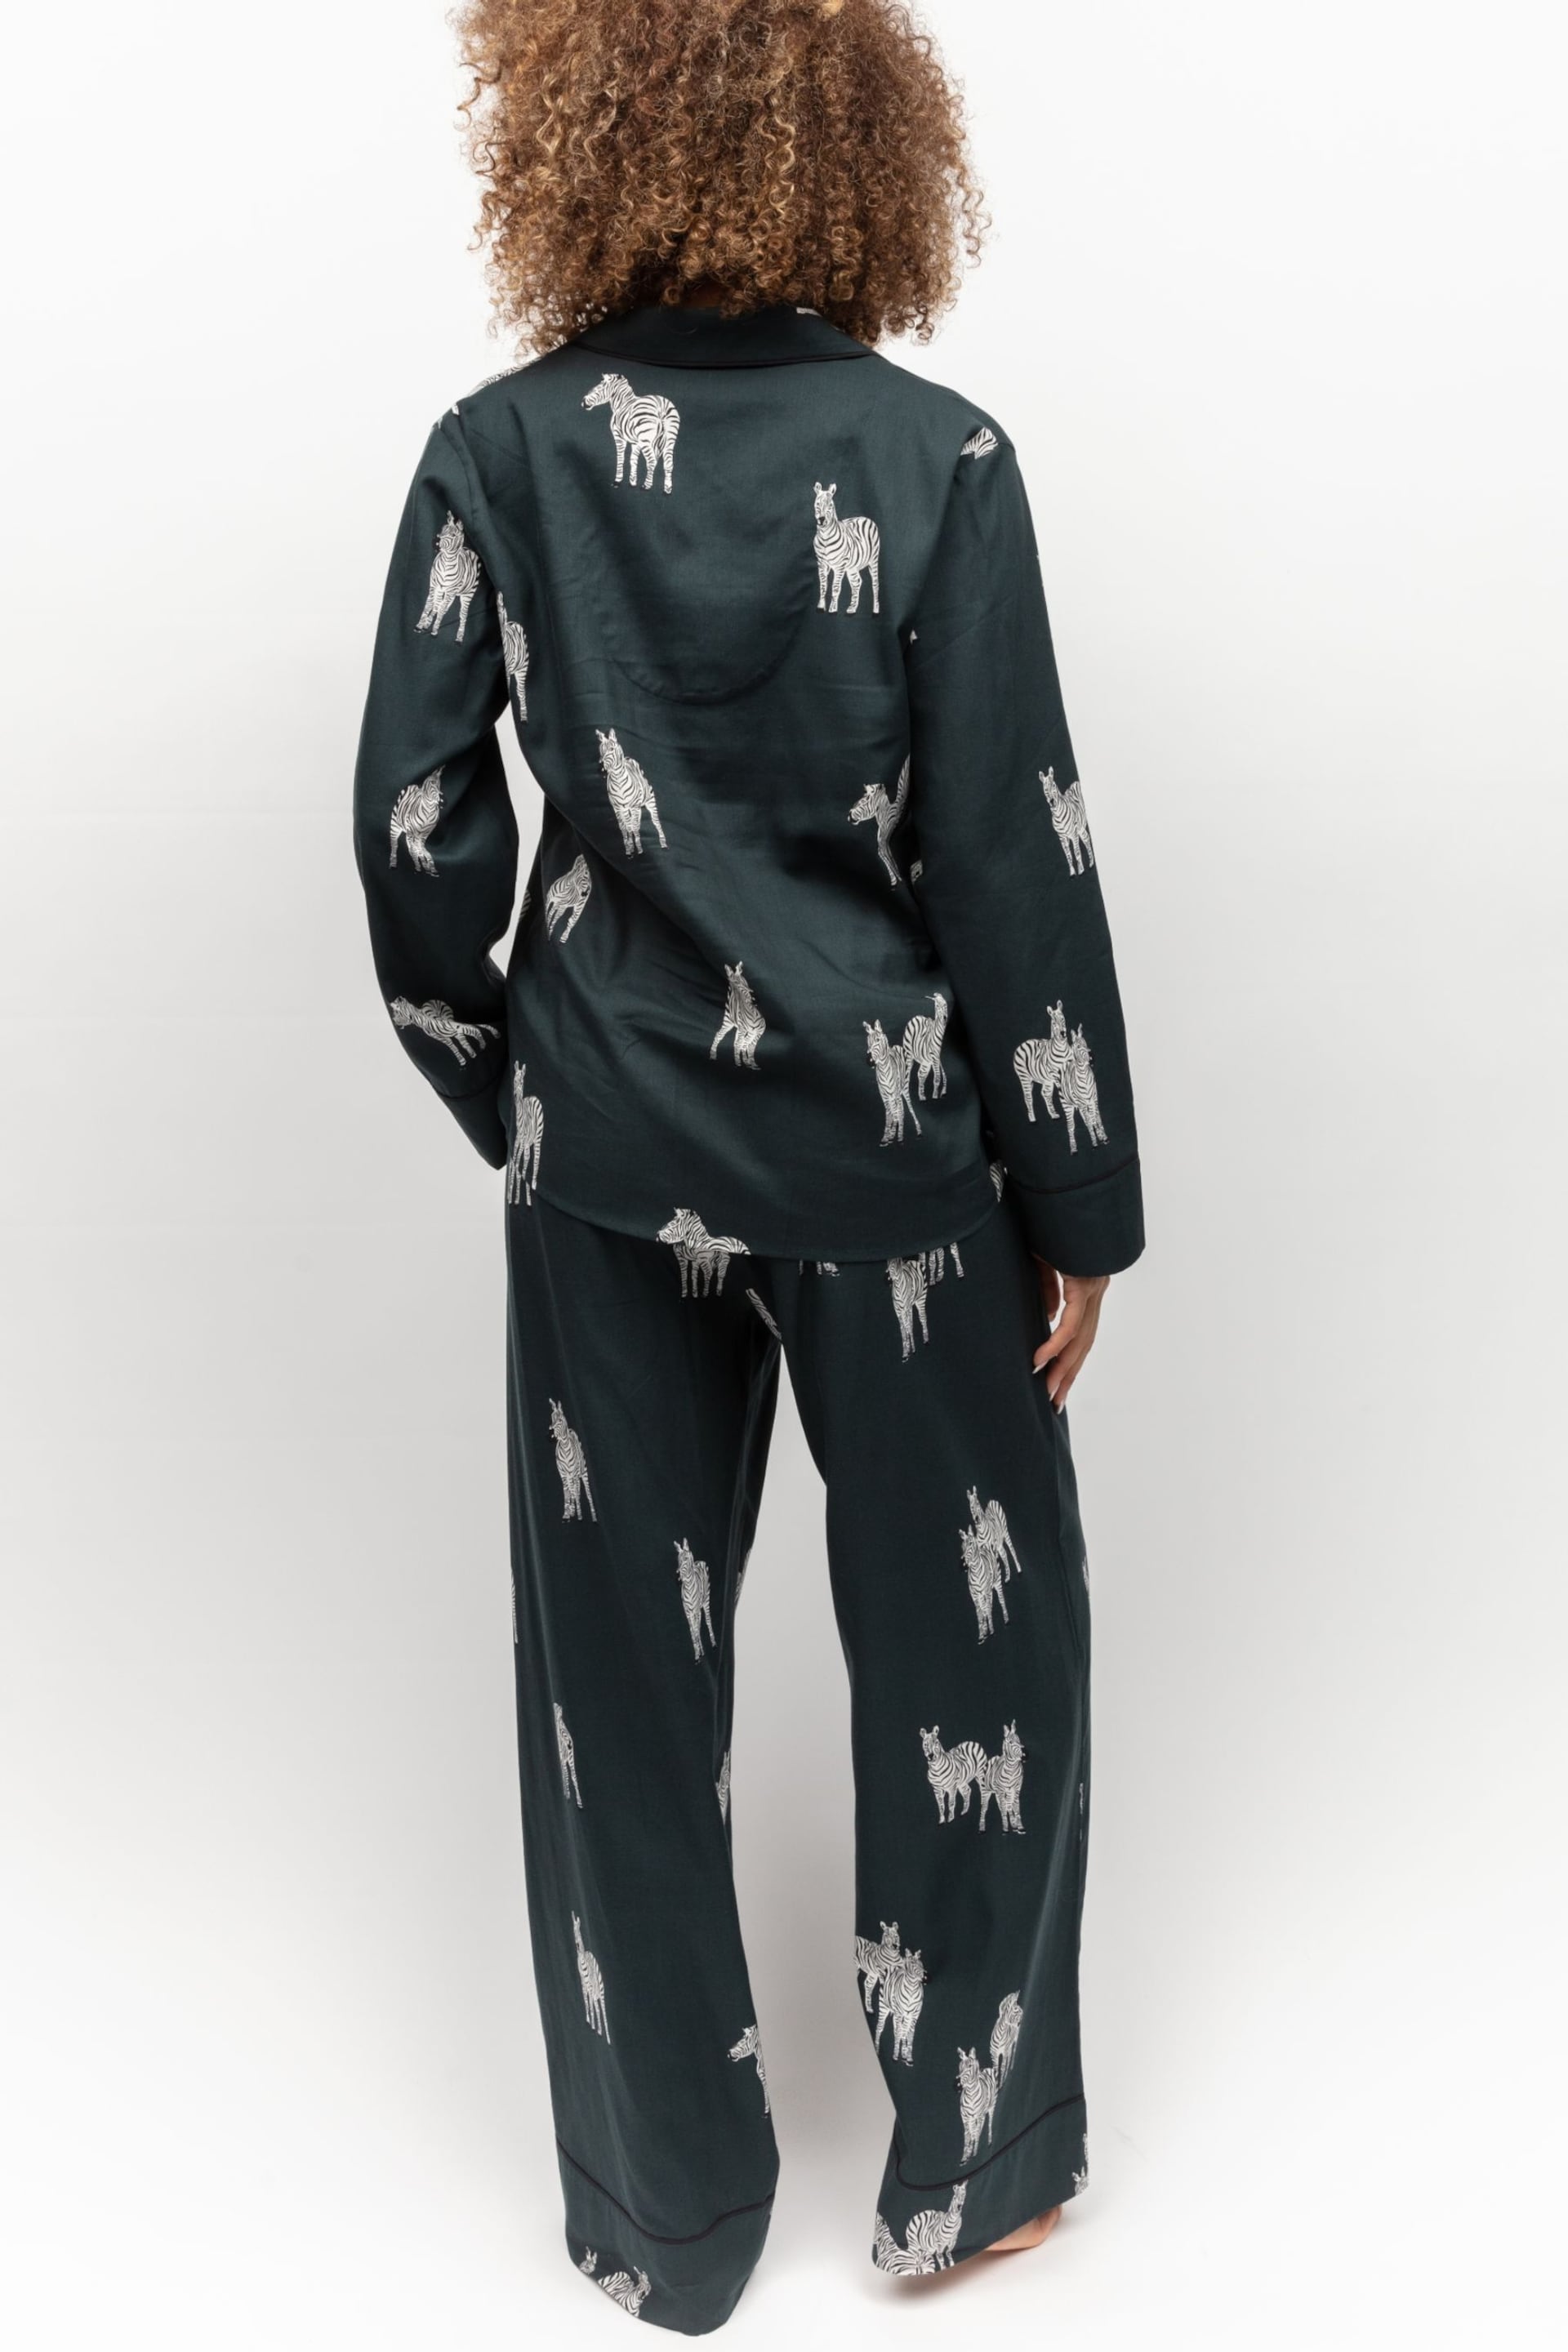 Cyberjammies Green Curve Zebra Print Pyjama Set - Image 3 of 4